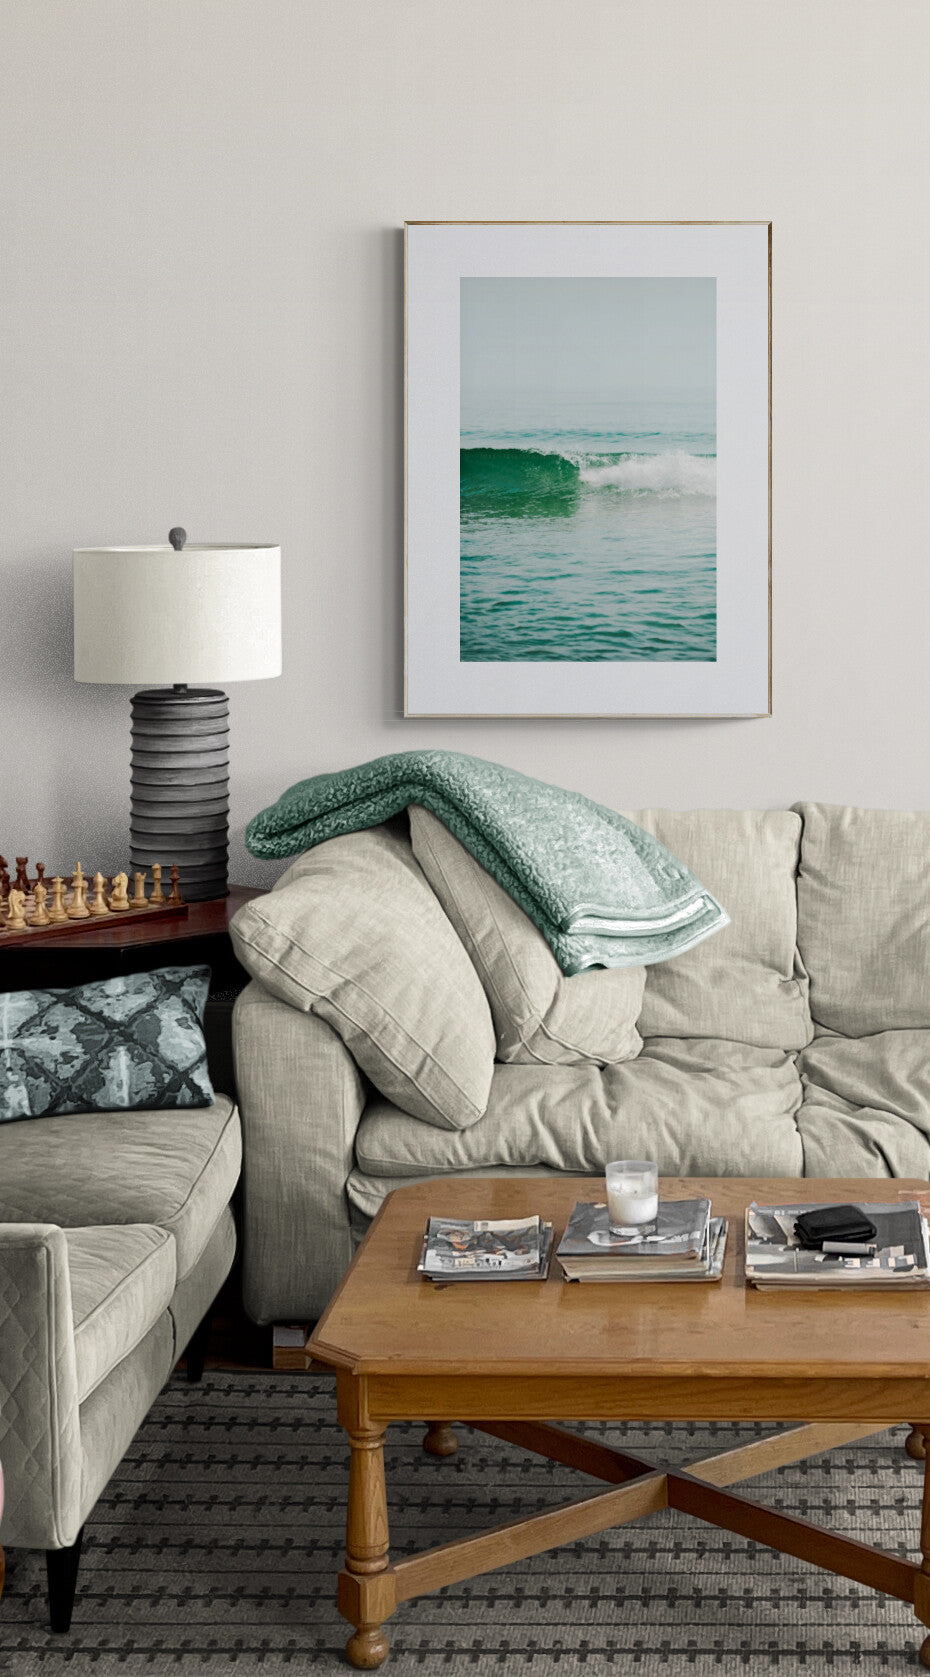 Cape Cod Atlantic Ocean Wave as Wall Art in an Apartment Living Room